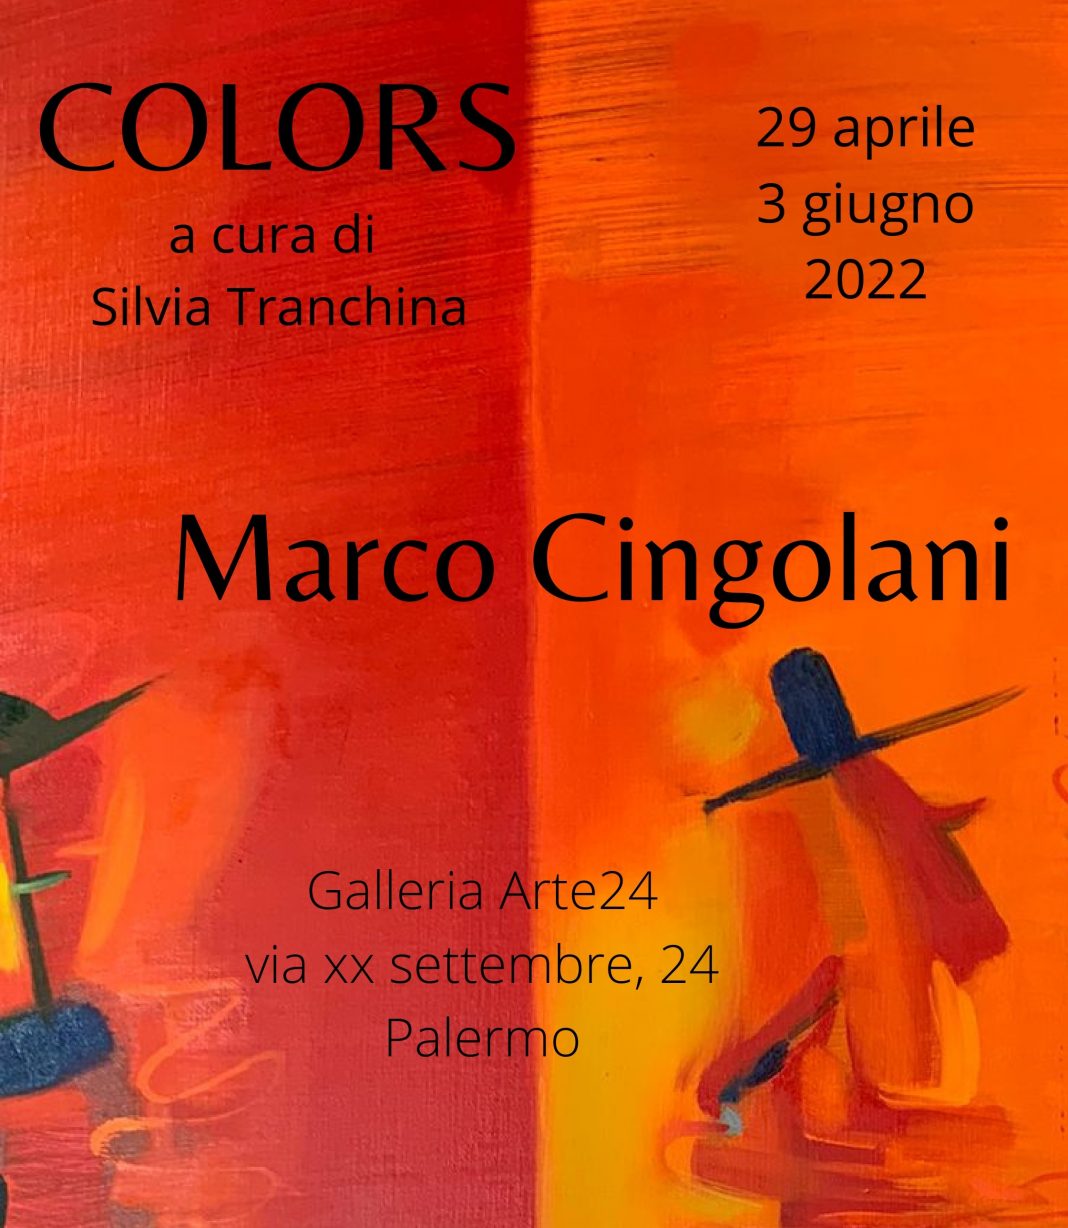 Marco Cingolani – Colorshttps://www.exibart.com/repository/media/formidable/11/img/e81/JPG-LOCANDINA-COLORS-22-_page-0001-Copia-1068x1228.jpg